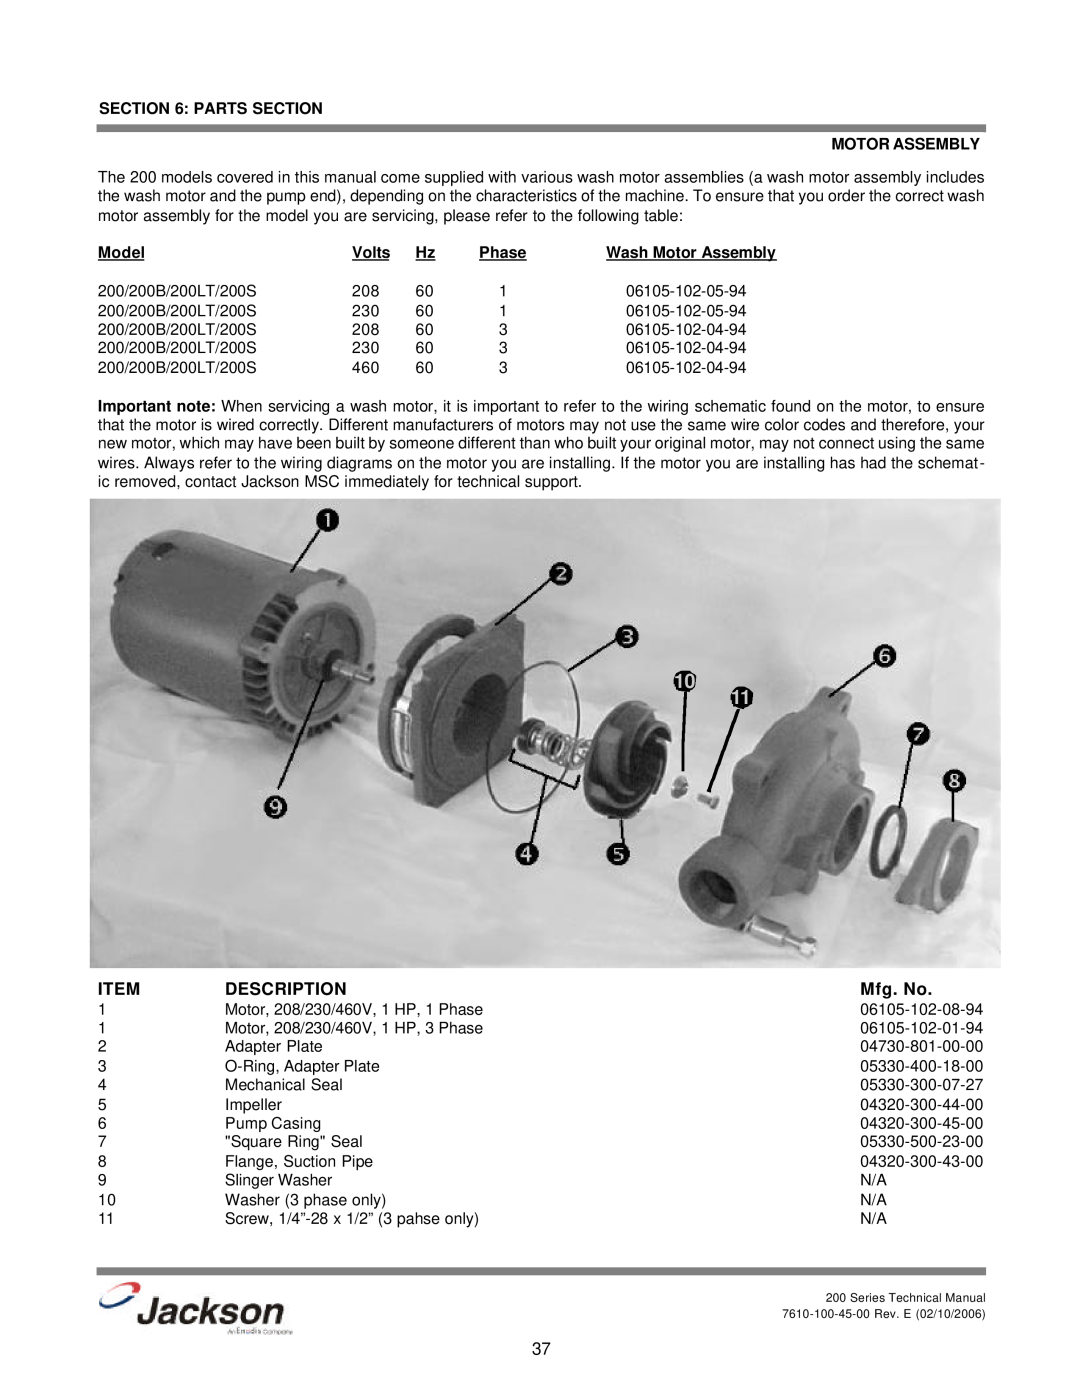 Jackson 200LT, 200S, 200B Parts Section Motor Assembly, Wash Motor Assembly, Description, Mfg. No, Model, Volts, Phase 